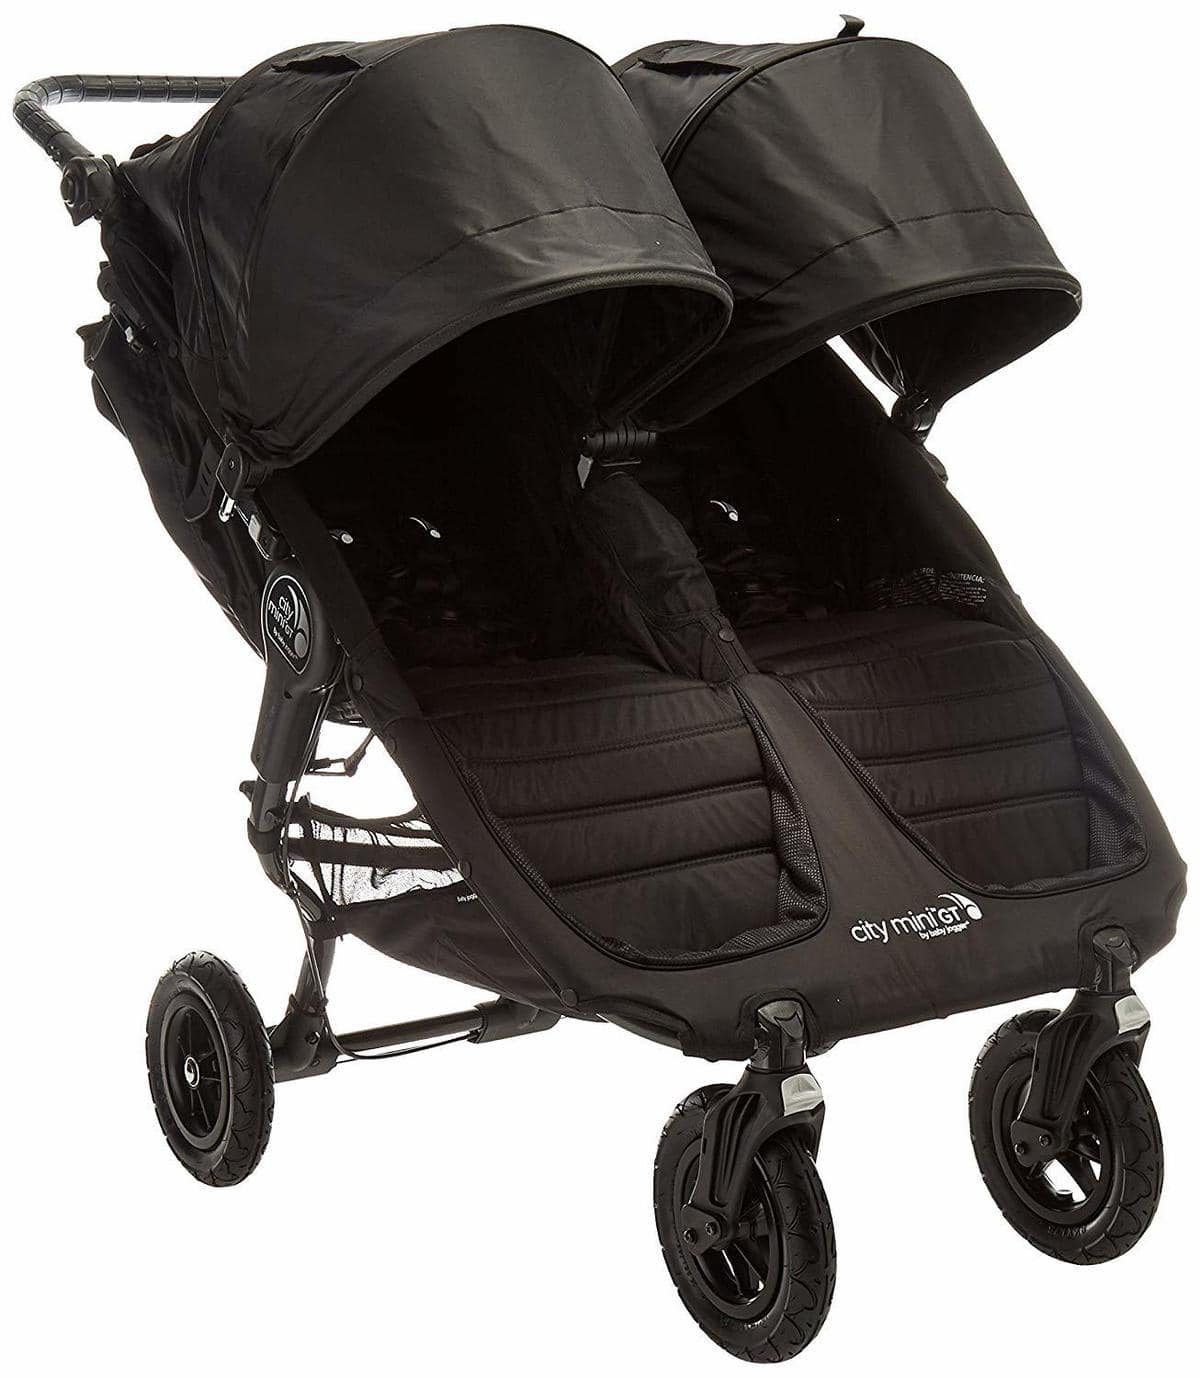 baby jogger city mini gt stroller